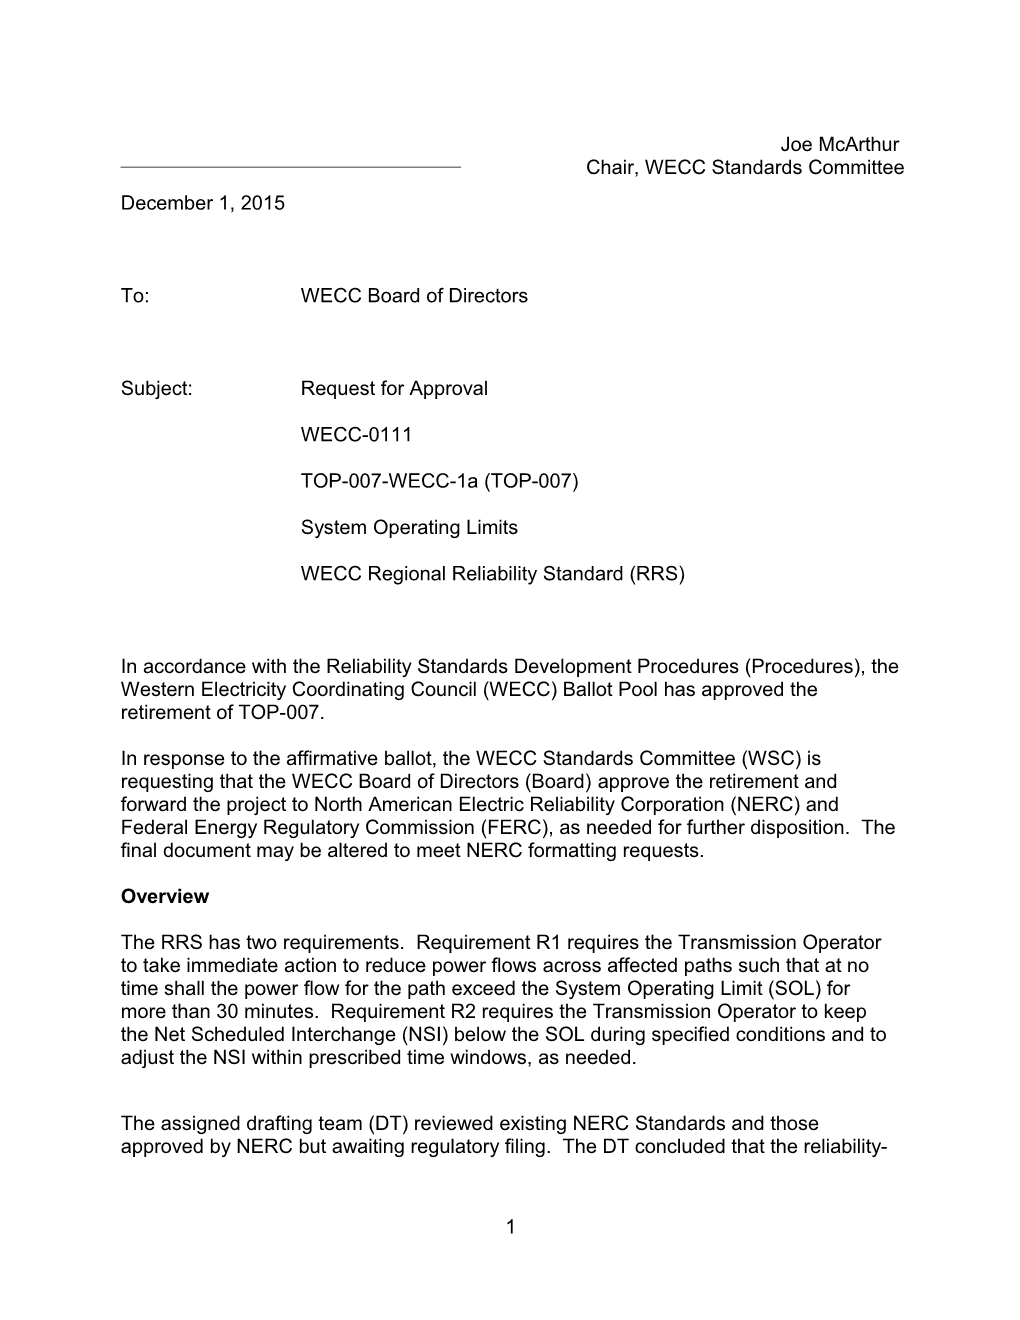 WECC-0111 Transmittal Letter - WSC to Board - 11-11-2015